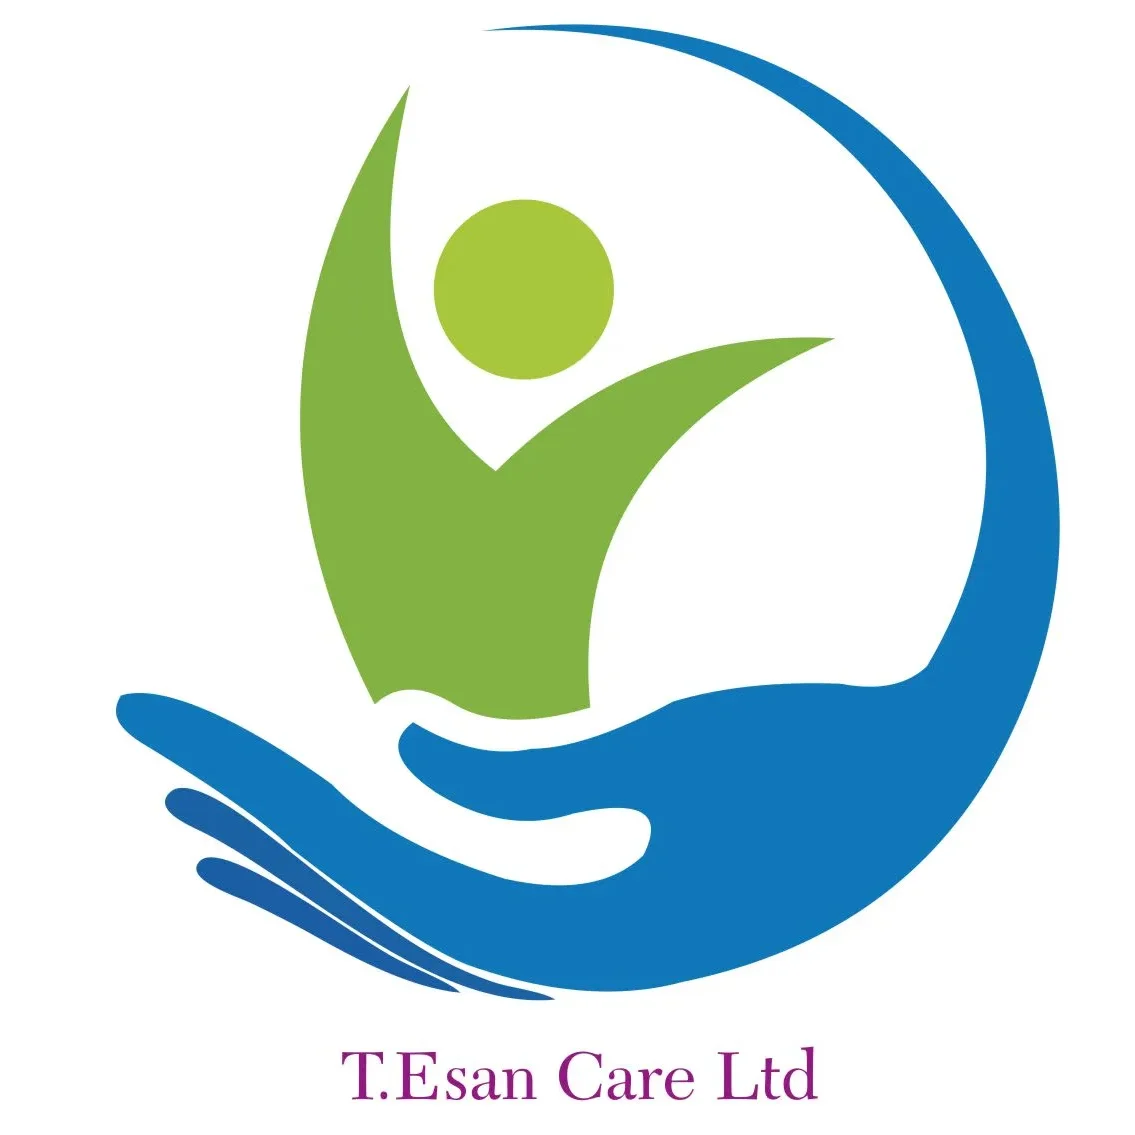 T.Esan Care Ltd - London, London SE6 2NZ - 020 3835 4696 | ShowMeLocal.com